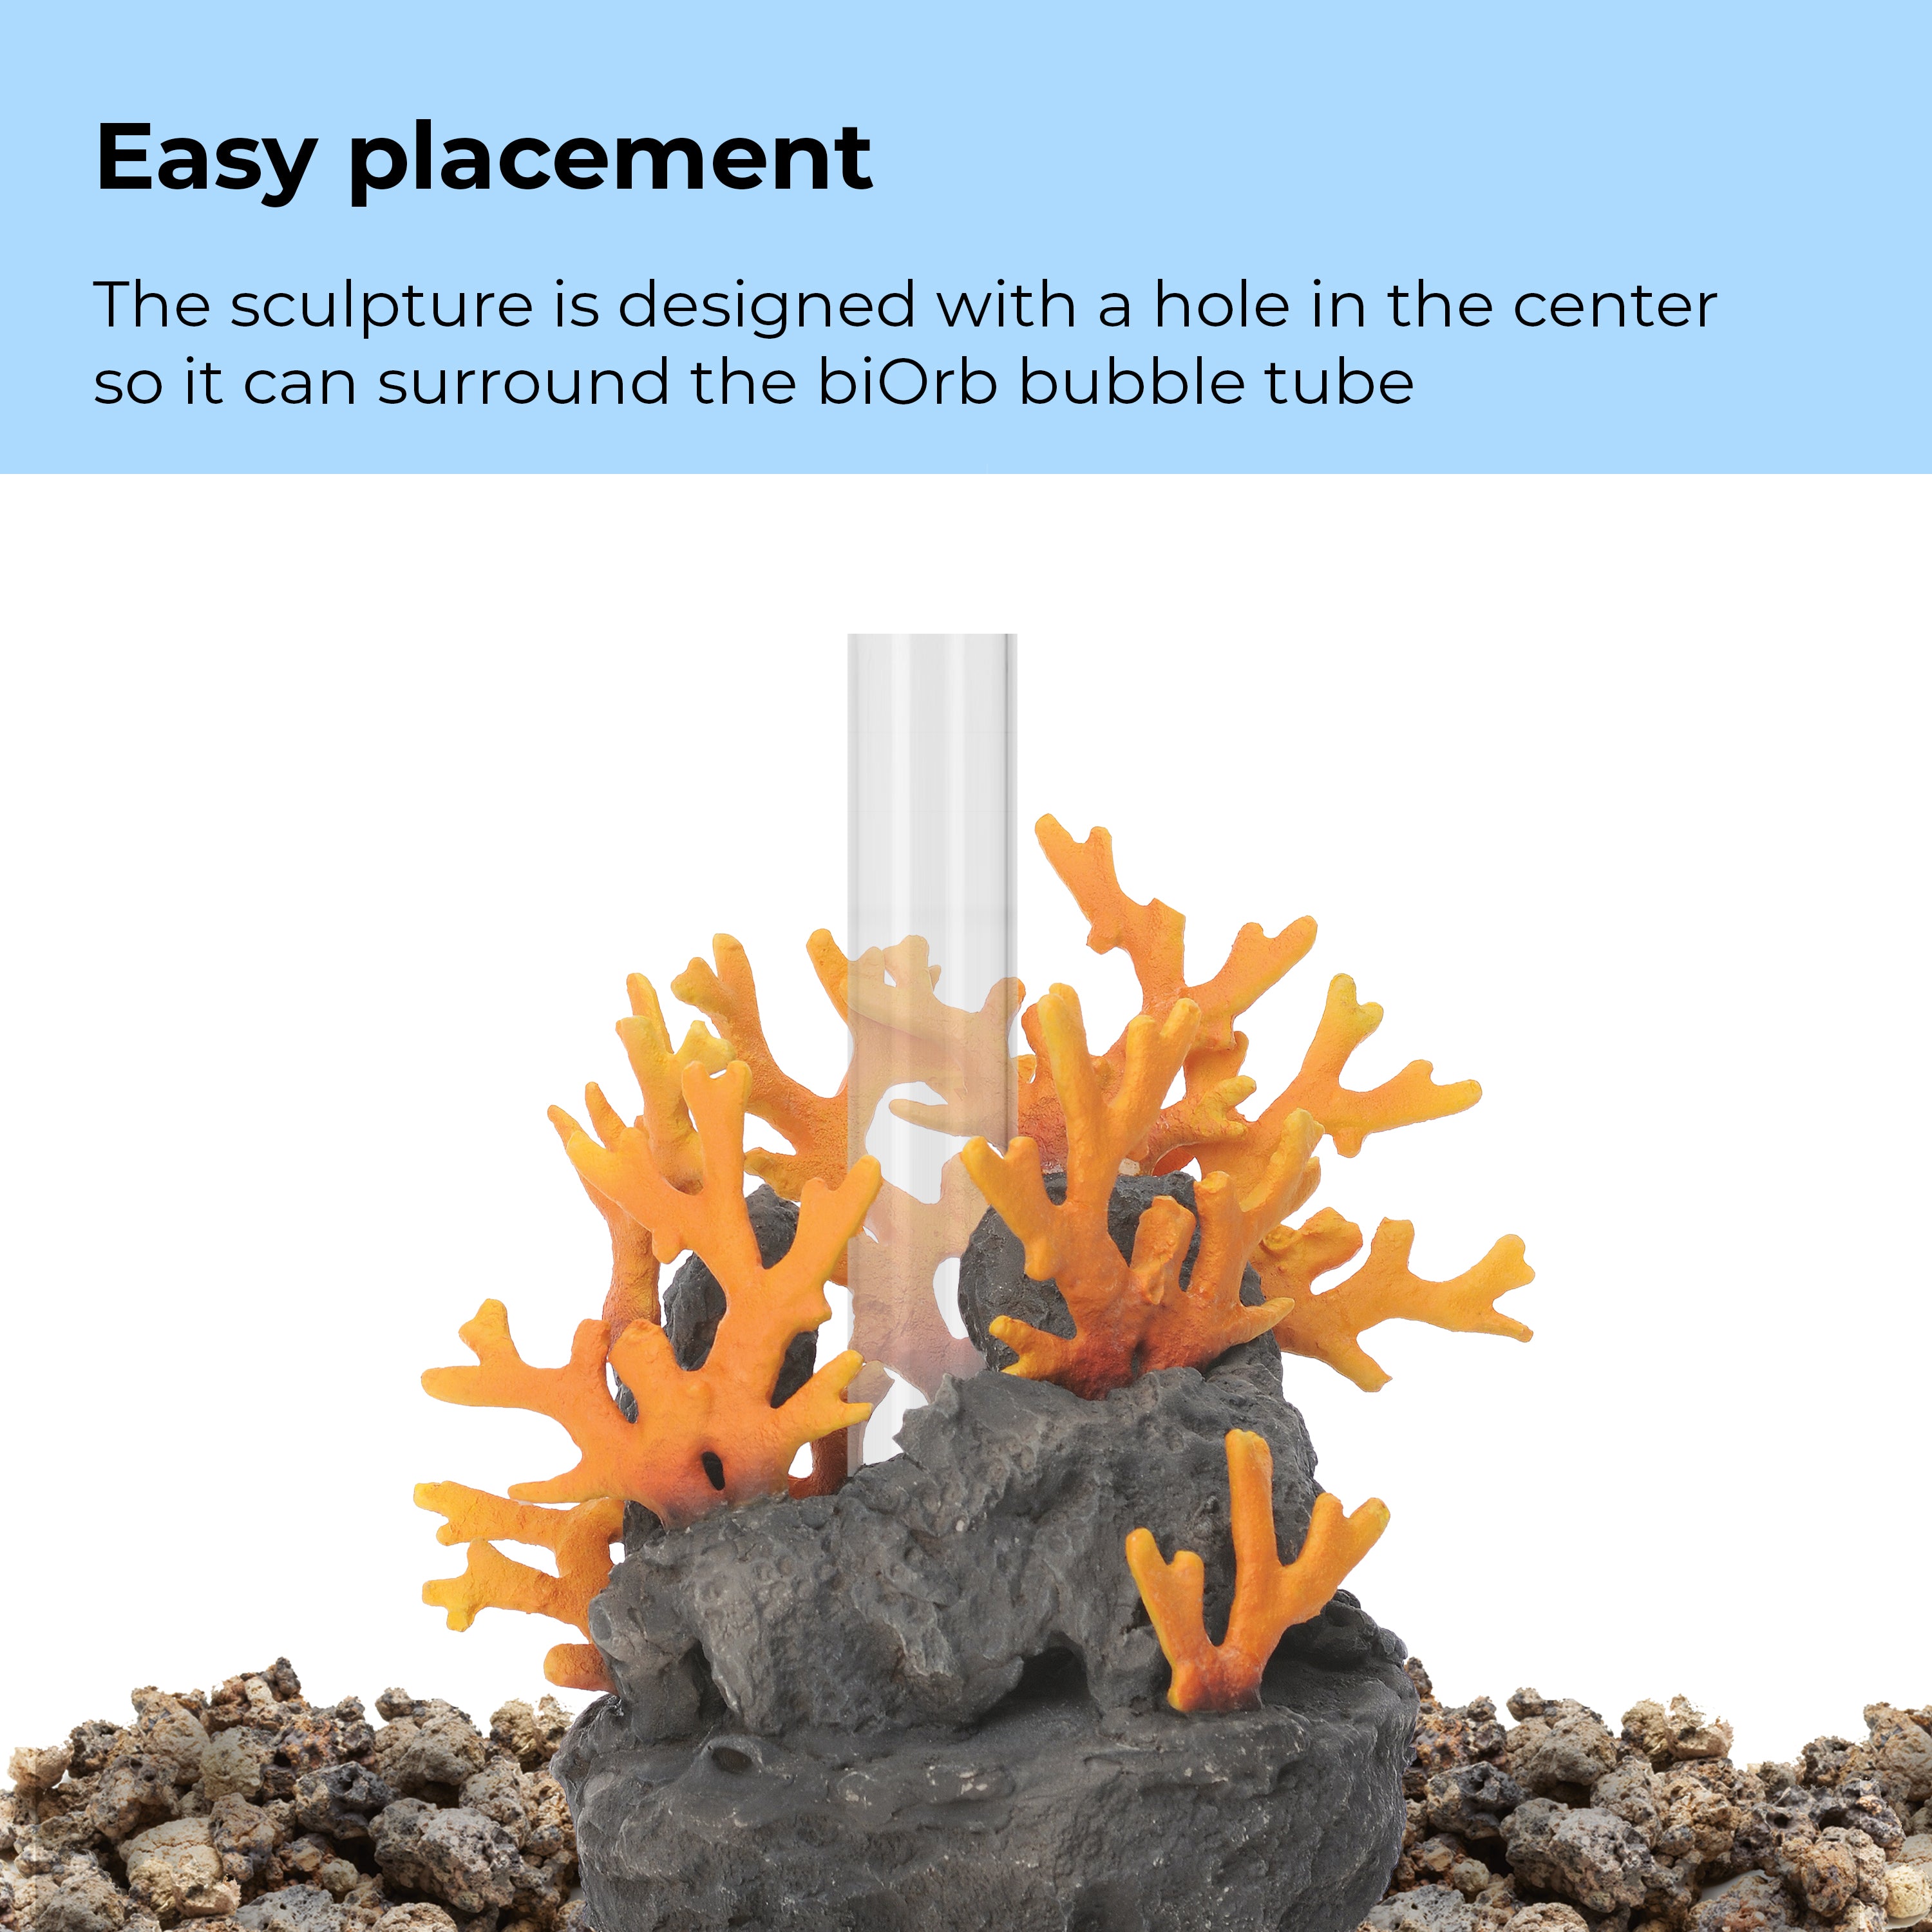 Lava Rock with Fire Coral Sculpture surrounds the biOrb bubble tube